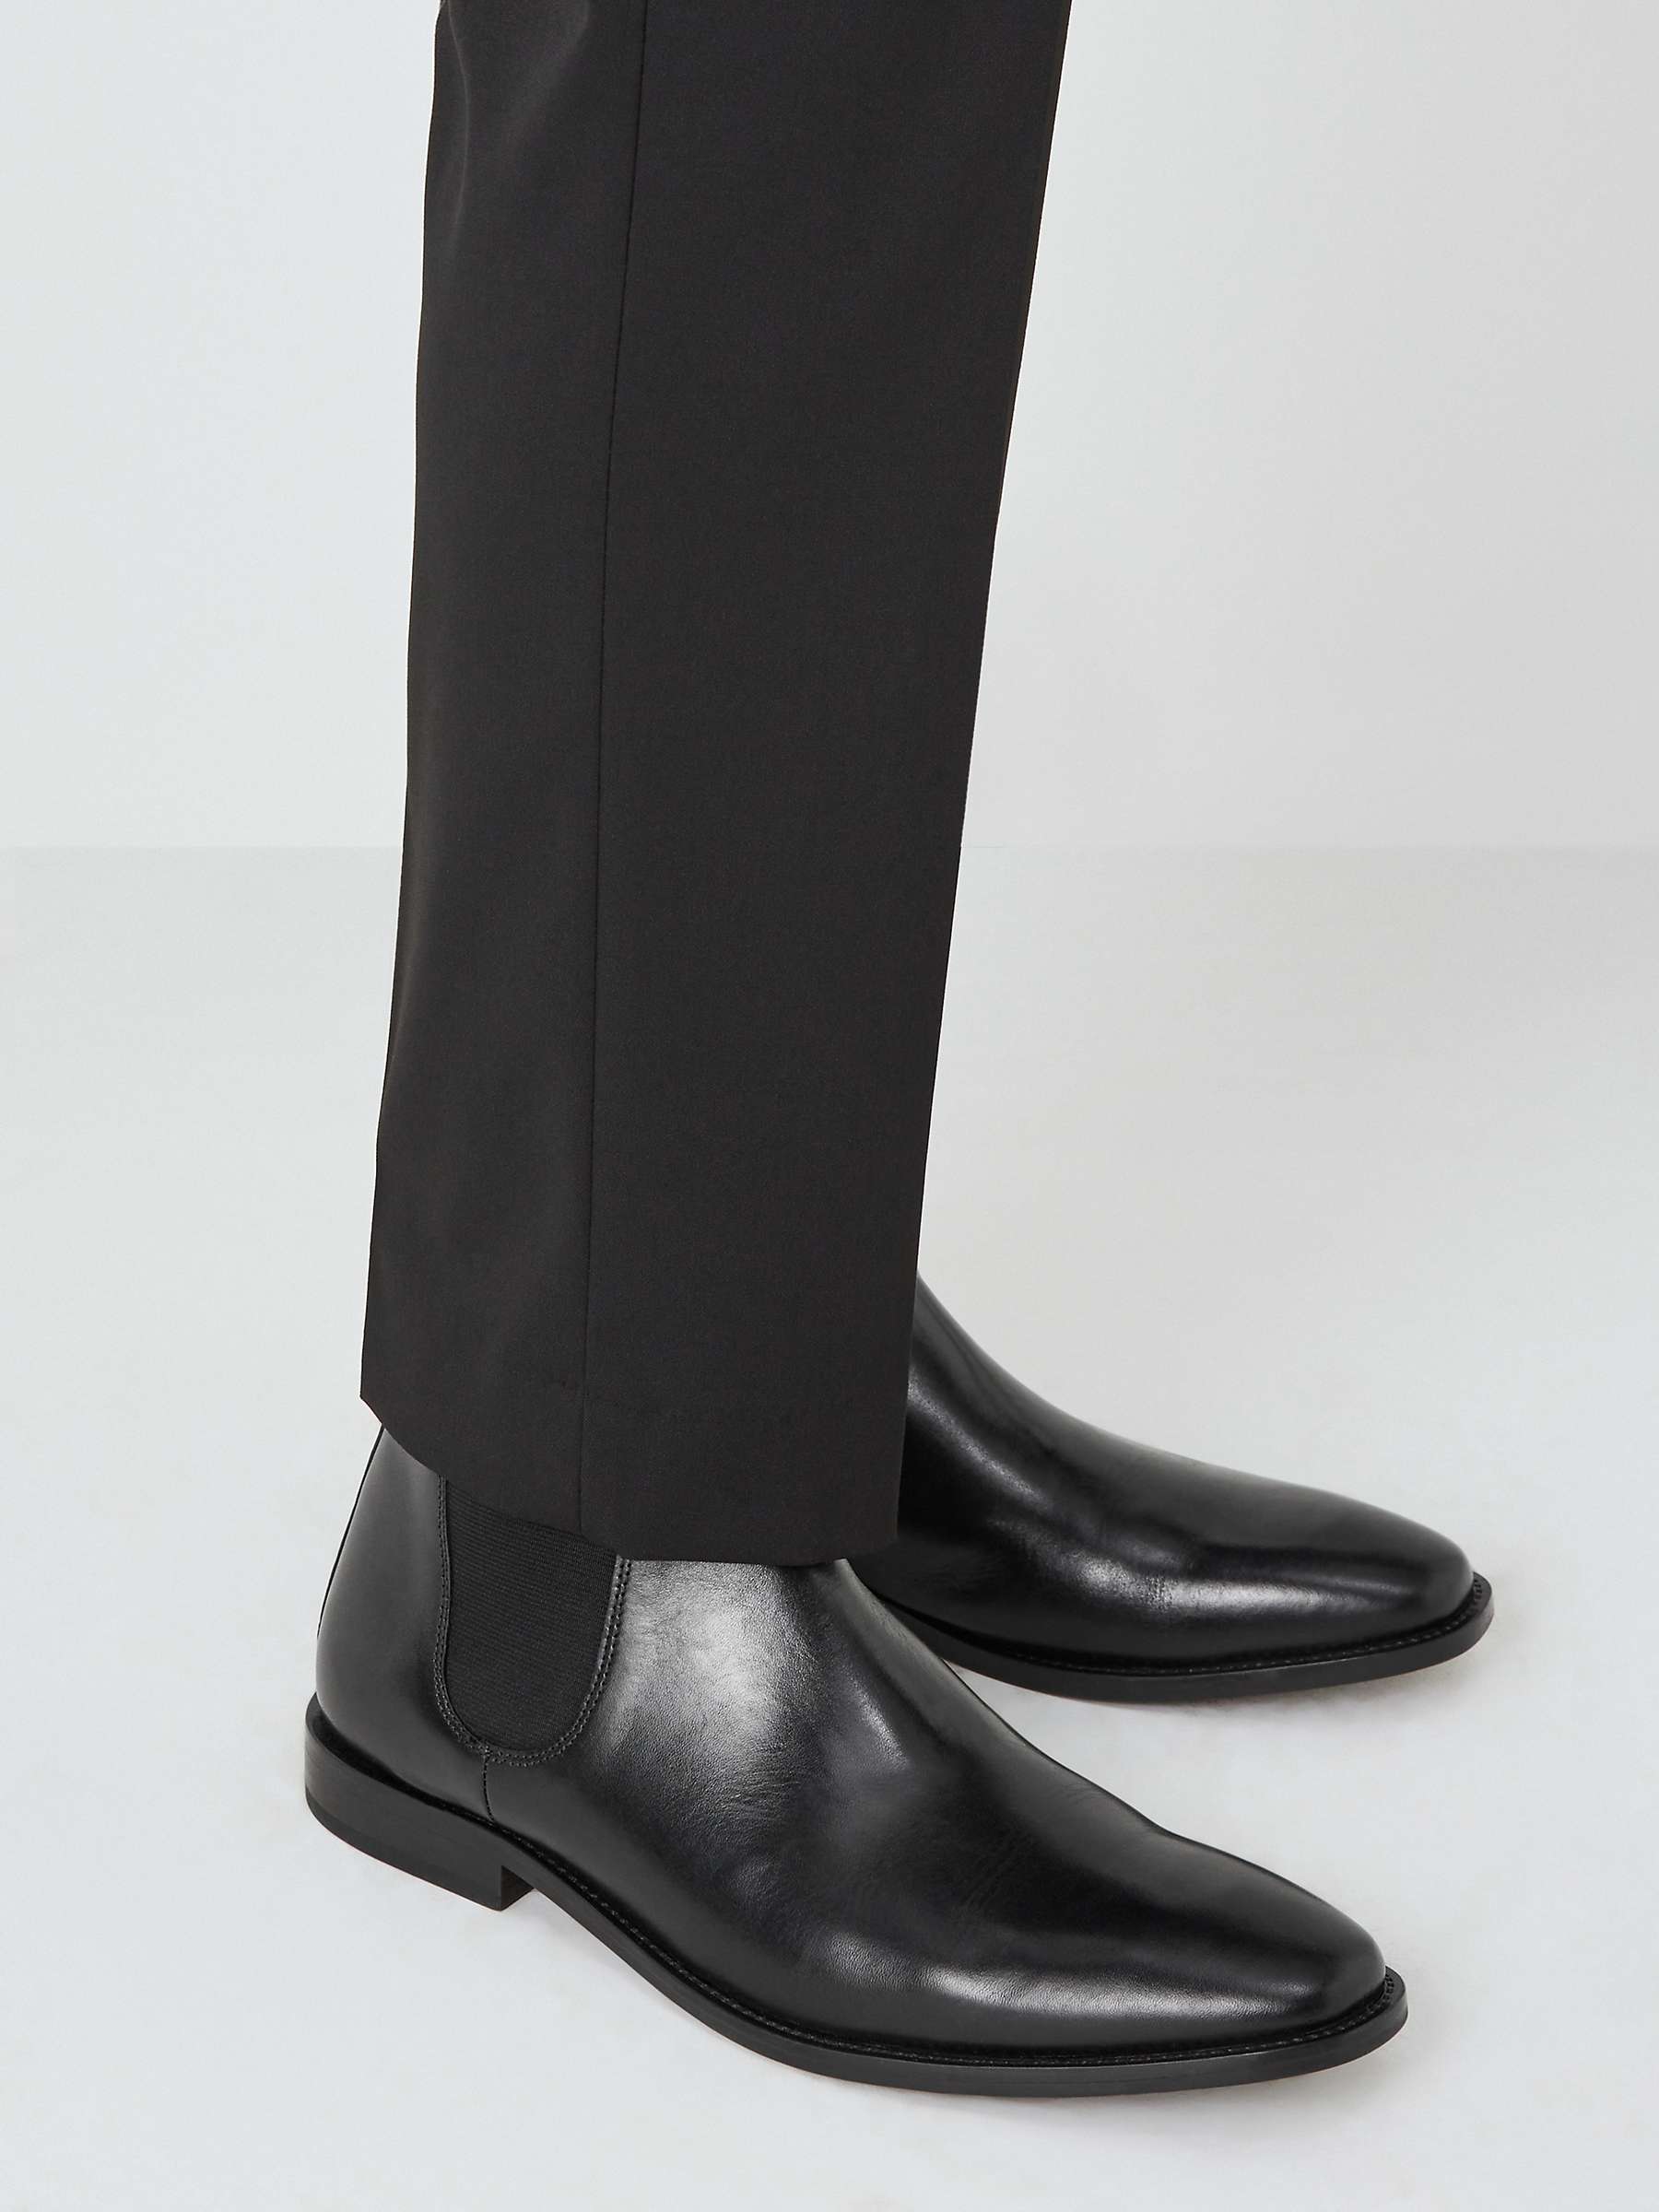 John Lewis Elsworth Leather Chelsea Boots, Black at John Lewis & Partners